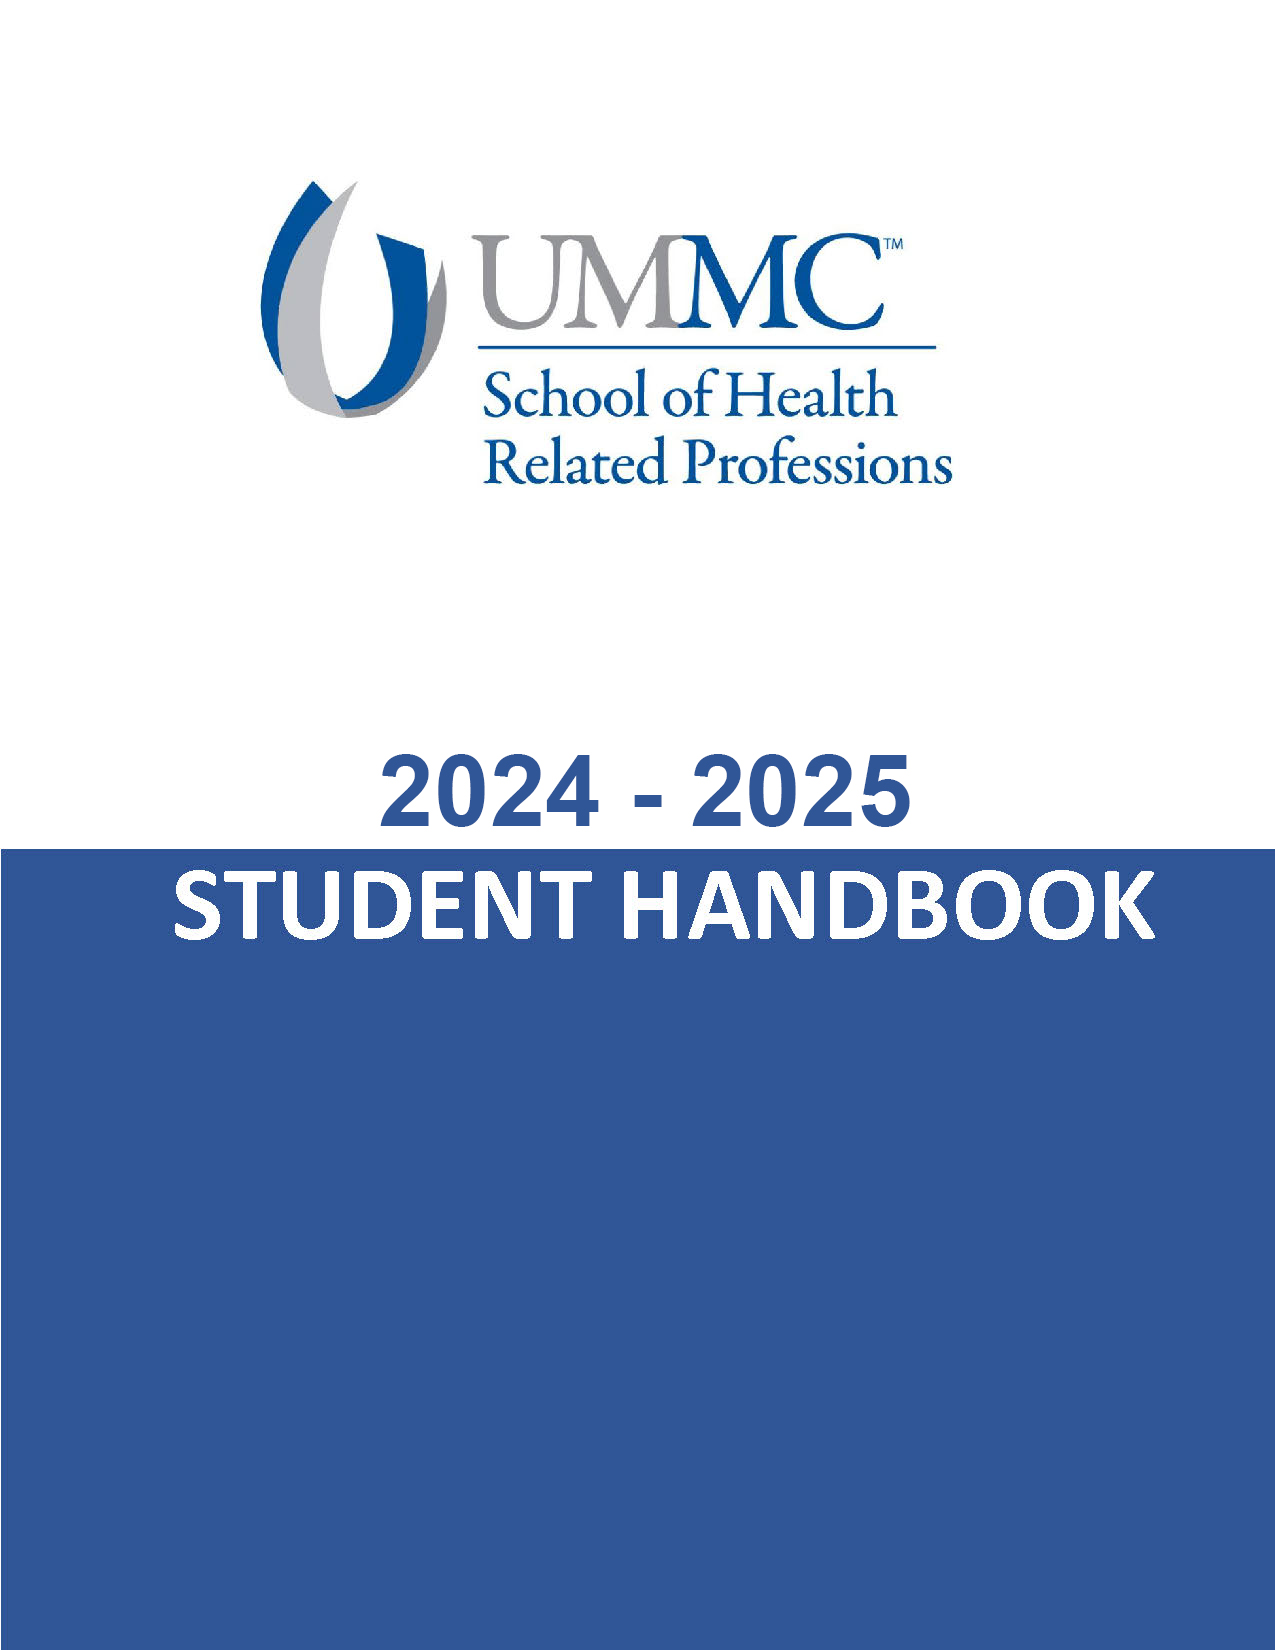 Handbook cover that reads UMMC School of Health Related Professions 2023-2024 Student Handbook